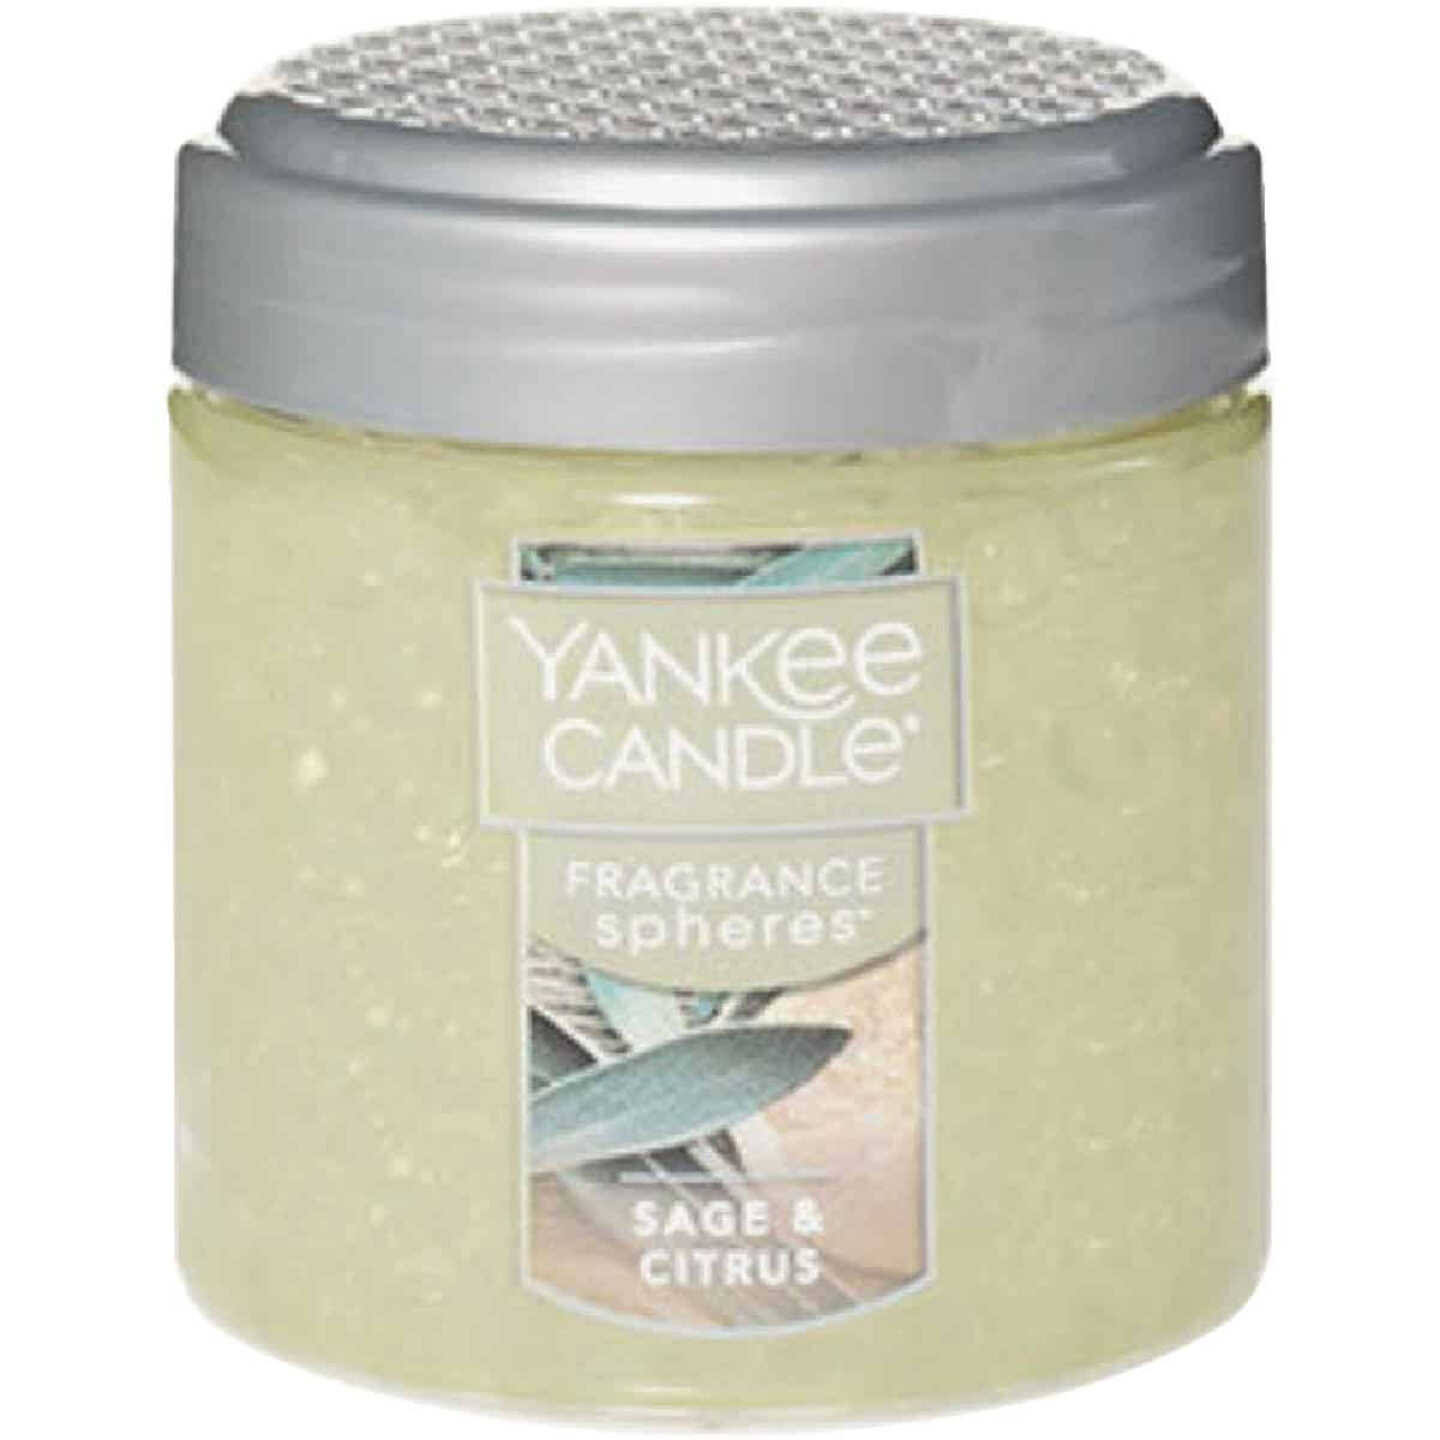 Yankee Candle Sage & Citrus Fragrance Spheres